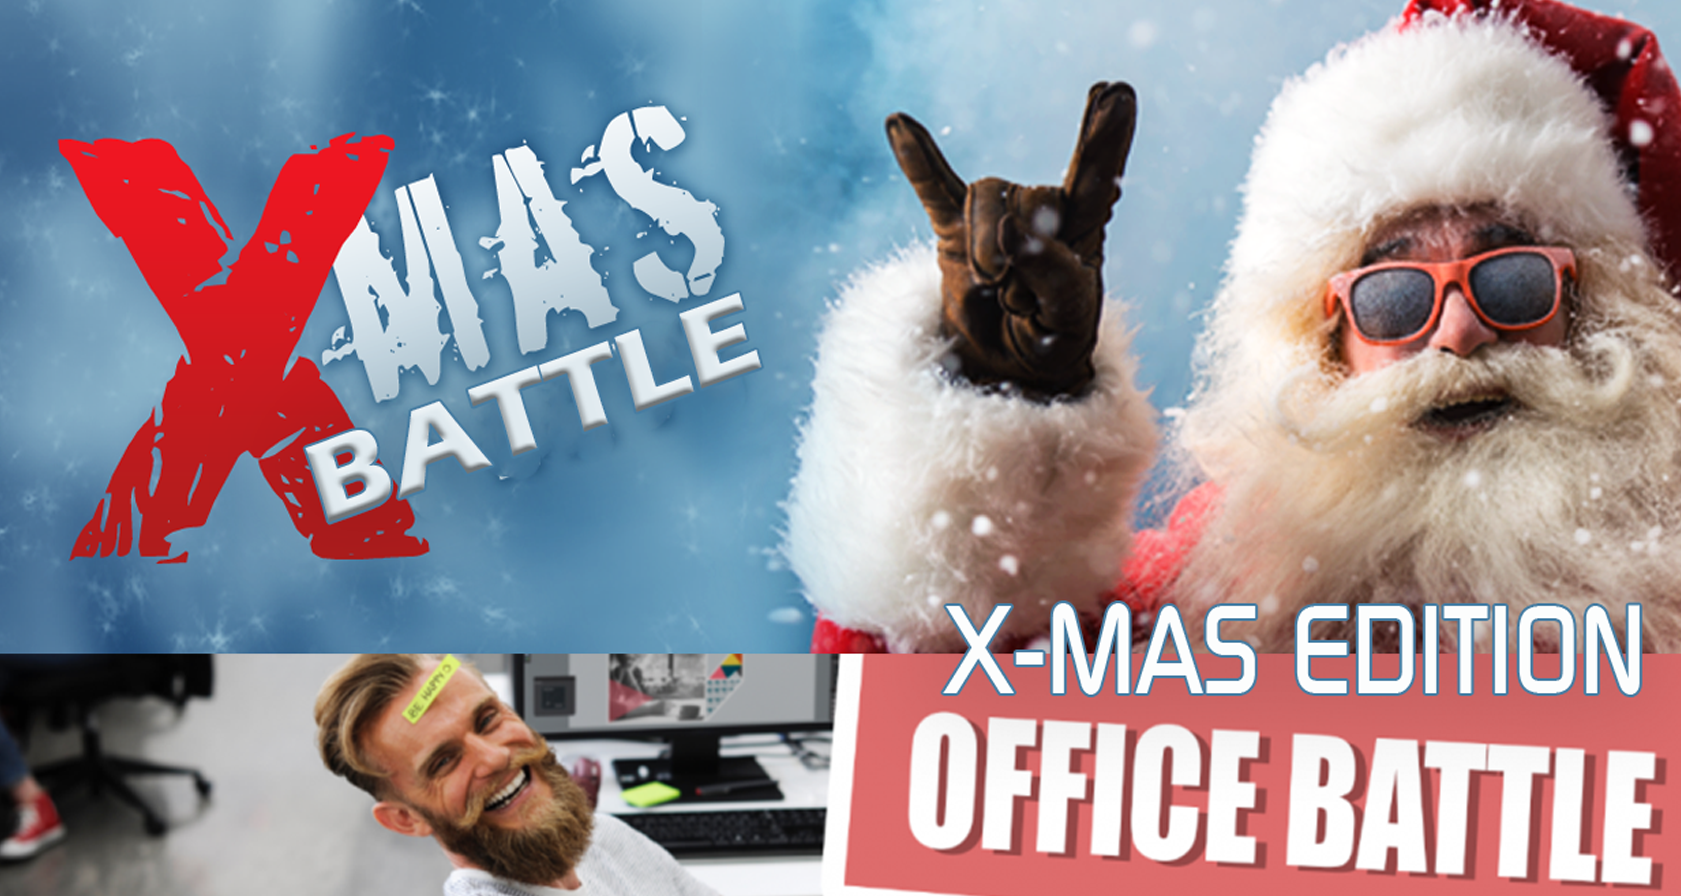 Teamuitje IJmuiden: X-mas Office battle